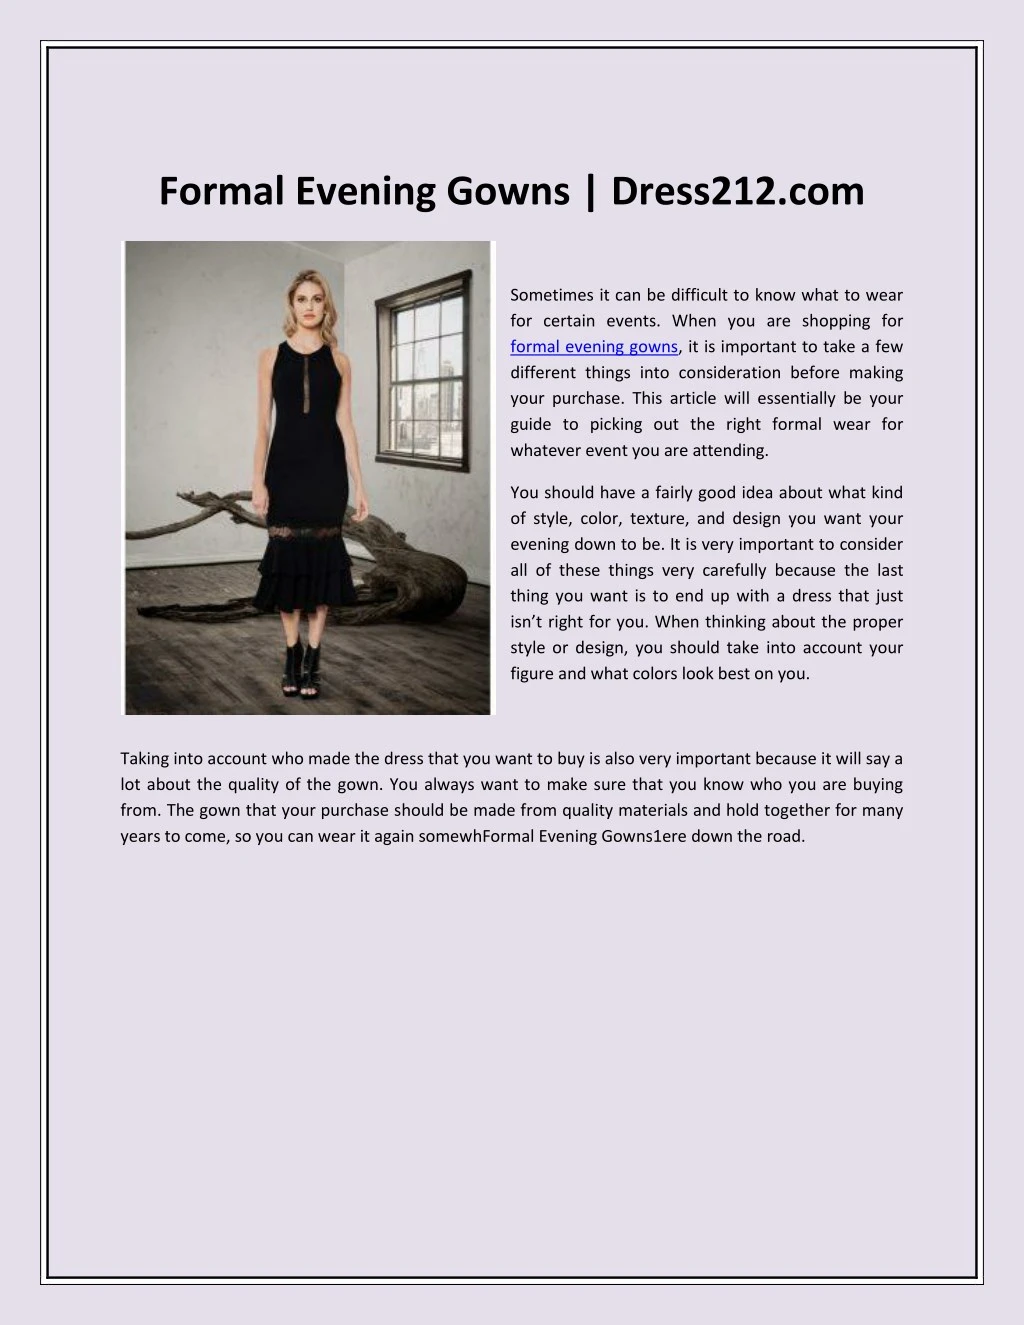 formal evening gowns dress212 com